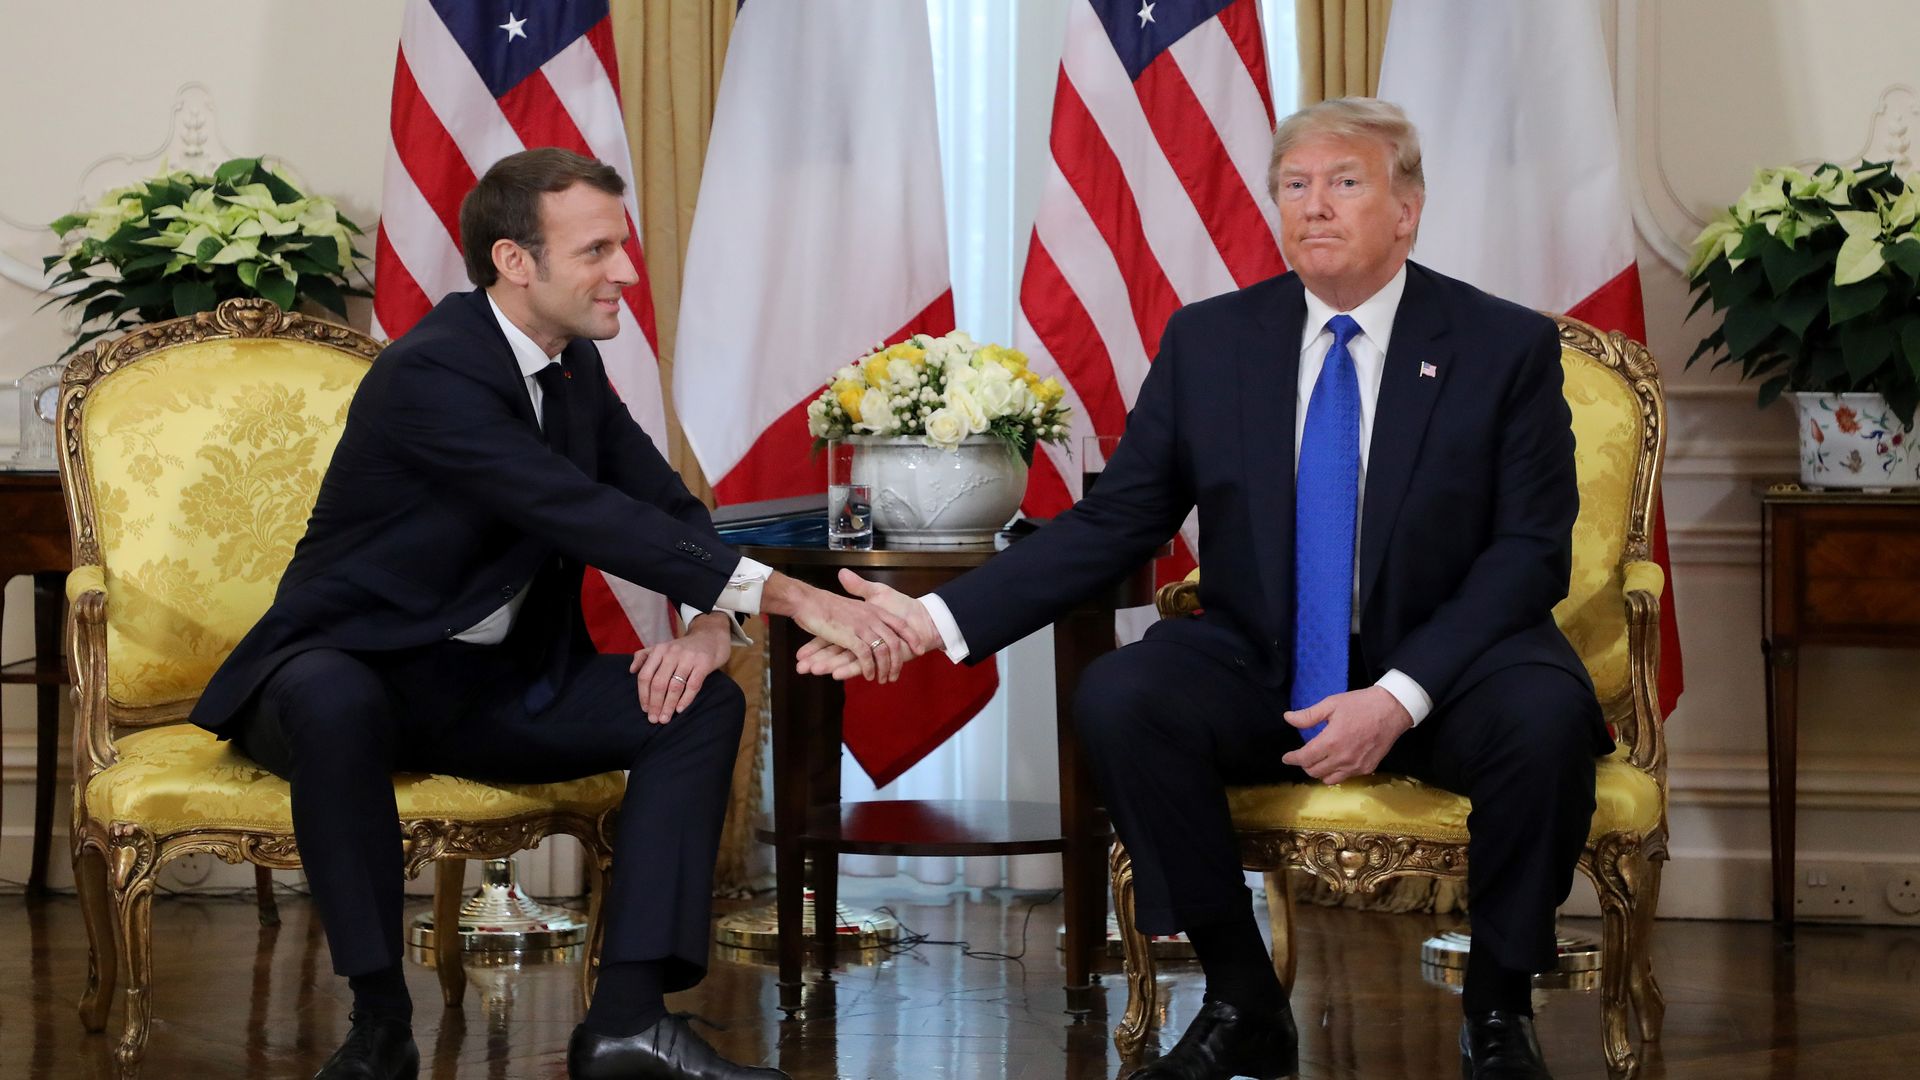 Trump and Macron shaking hands